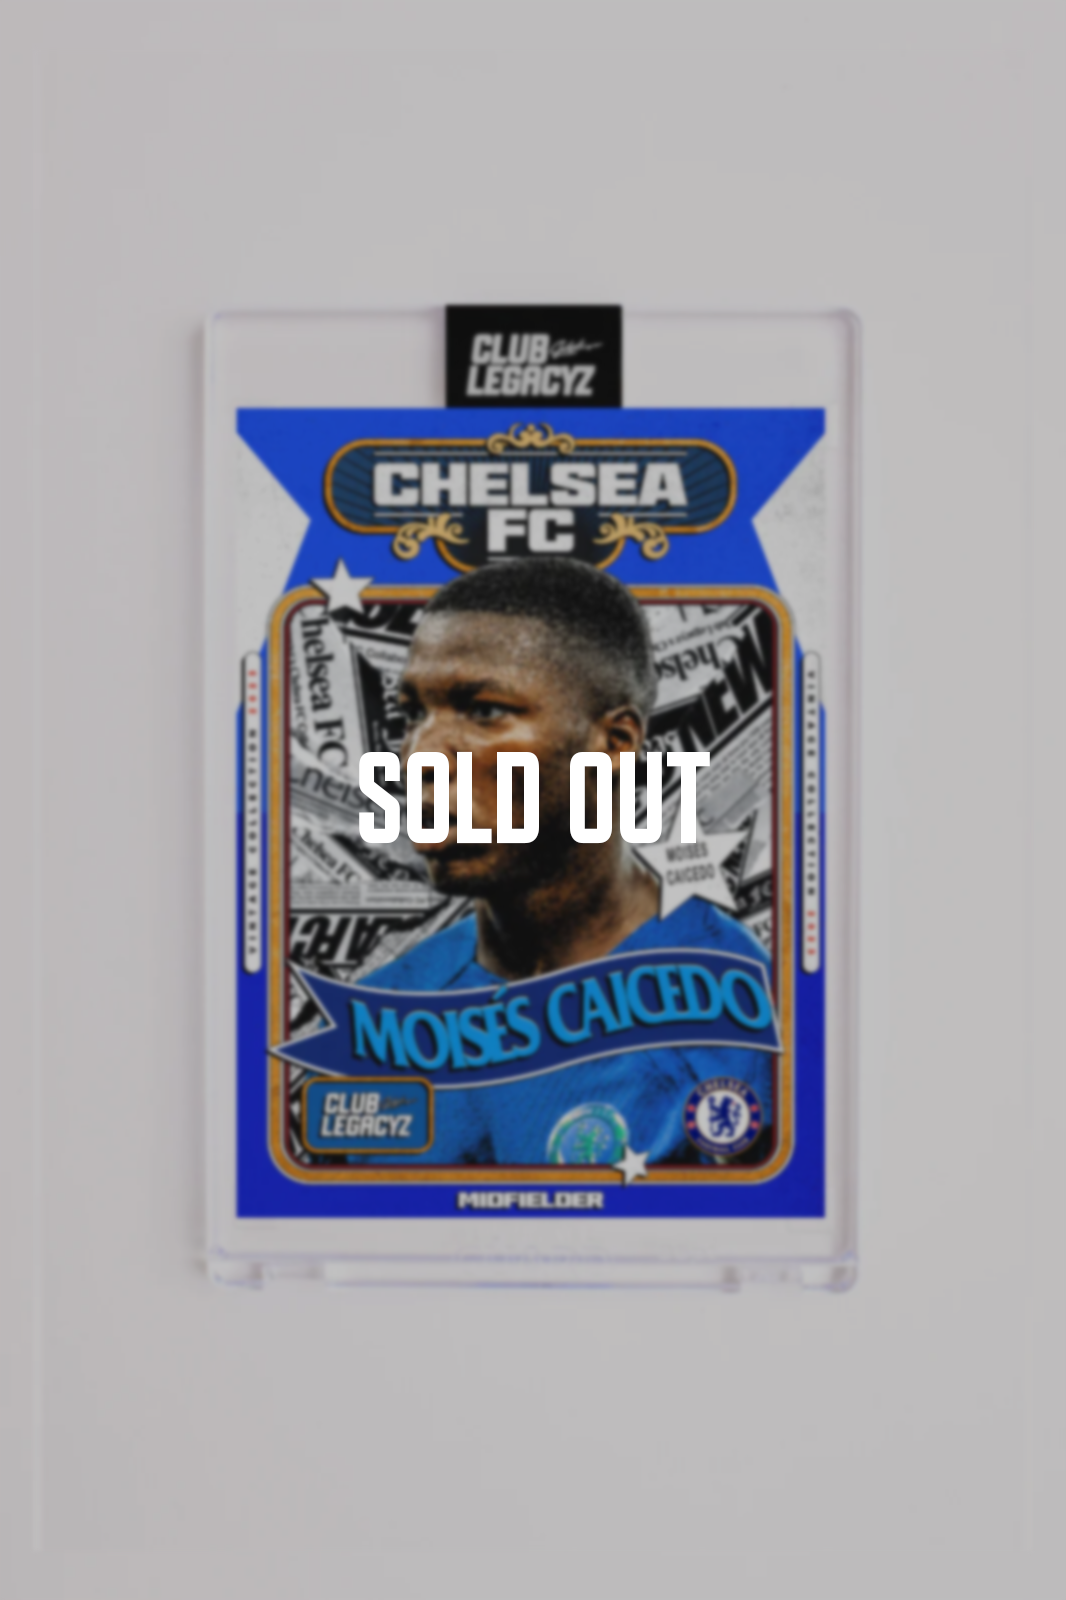 Chelsea FC - Moisés Caicedo Retro Icon limited to 100